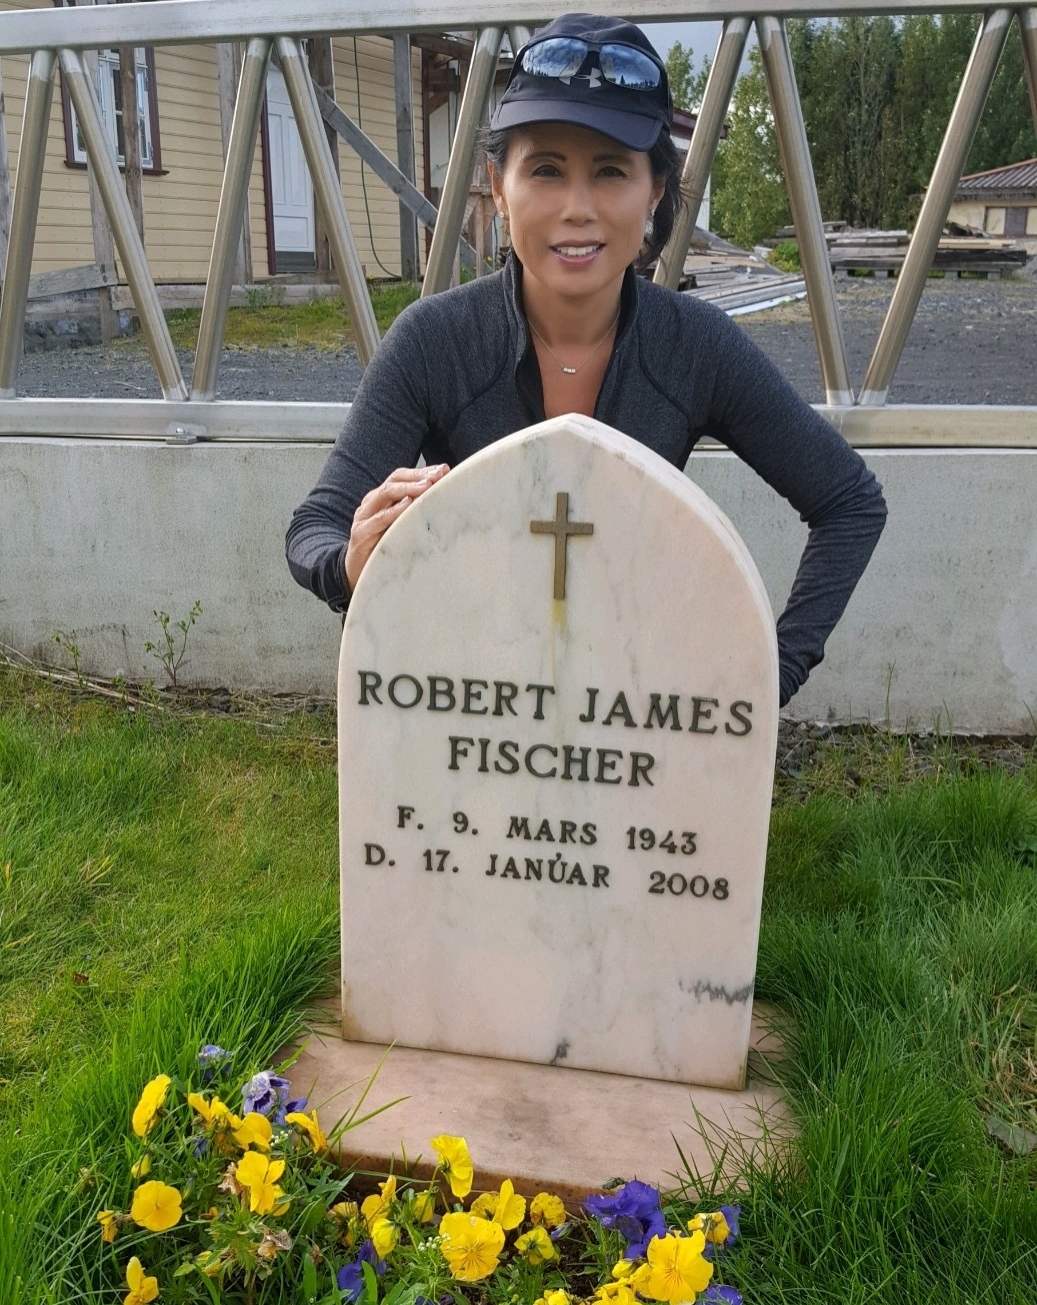  VP Kimberly visited the grave of former World Champion Bobby Fischer near Selfoss, Iceland 